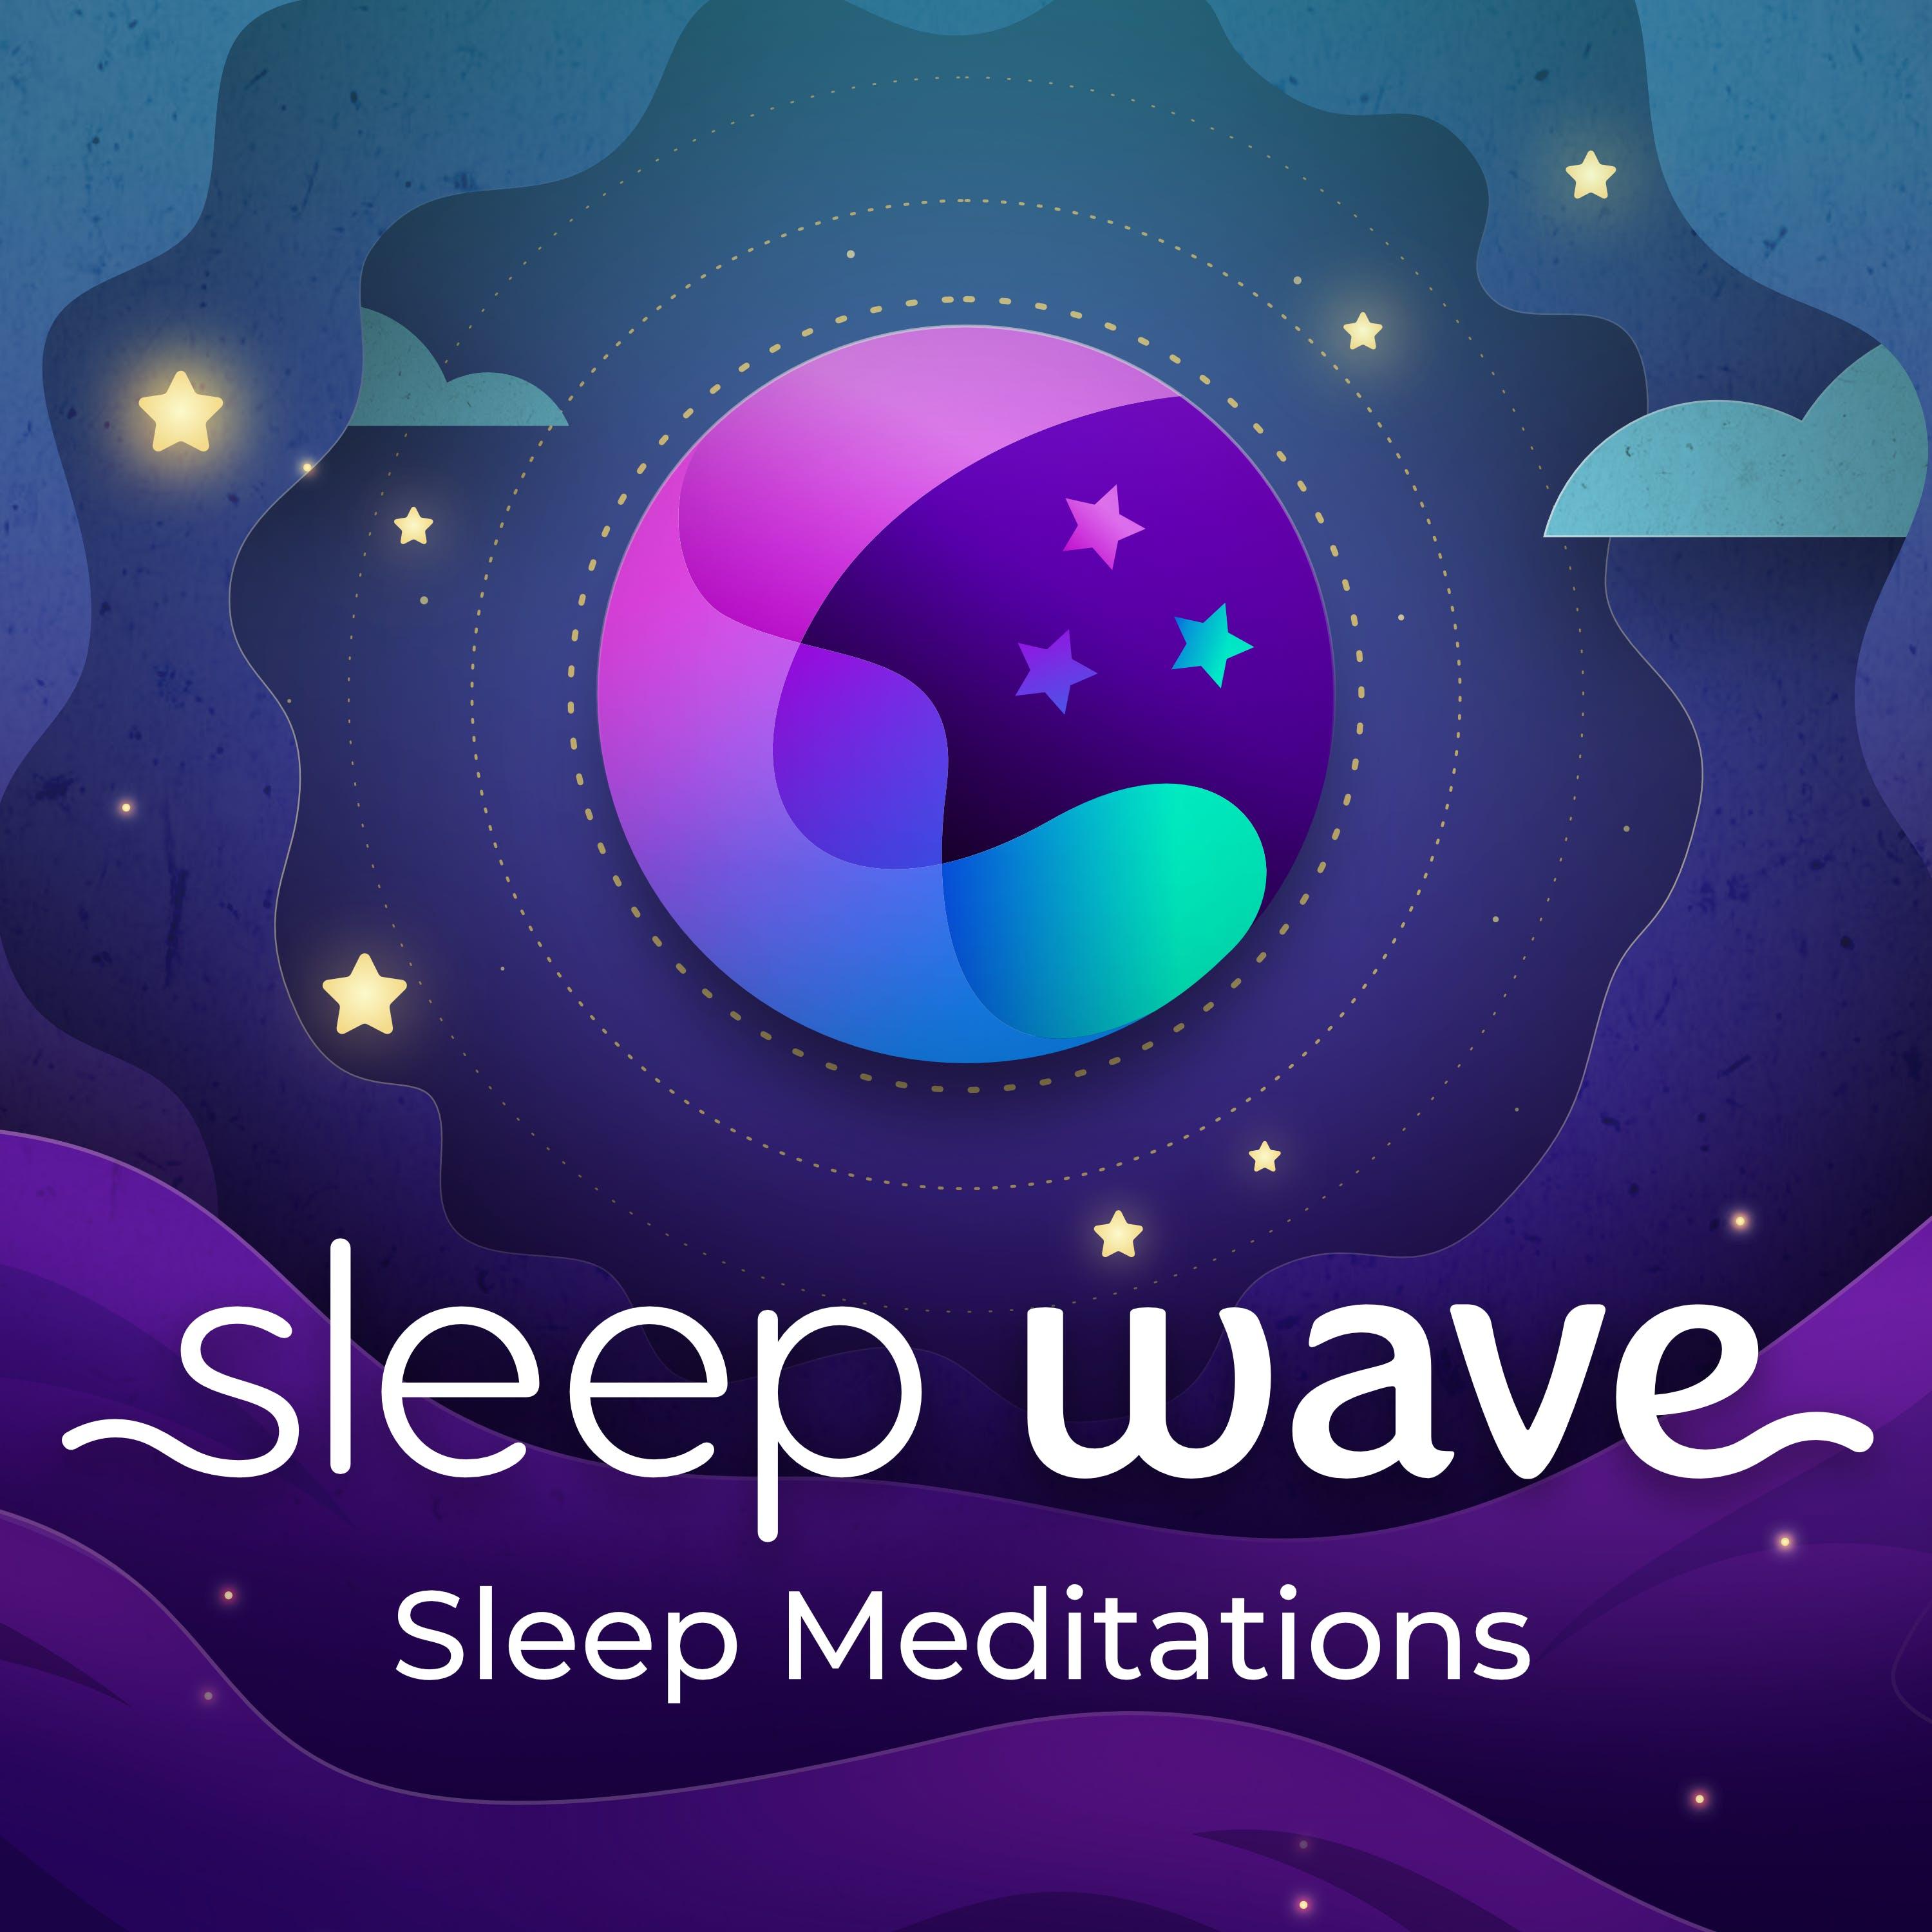 Sleep Meditation - Relieve Stress For Better Health